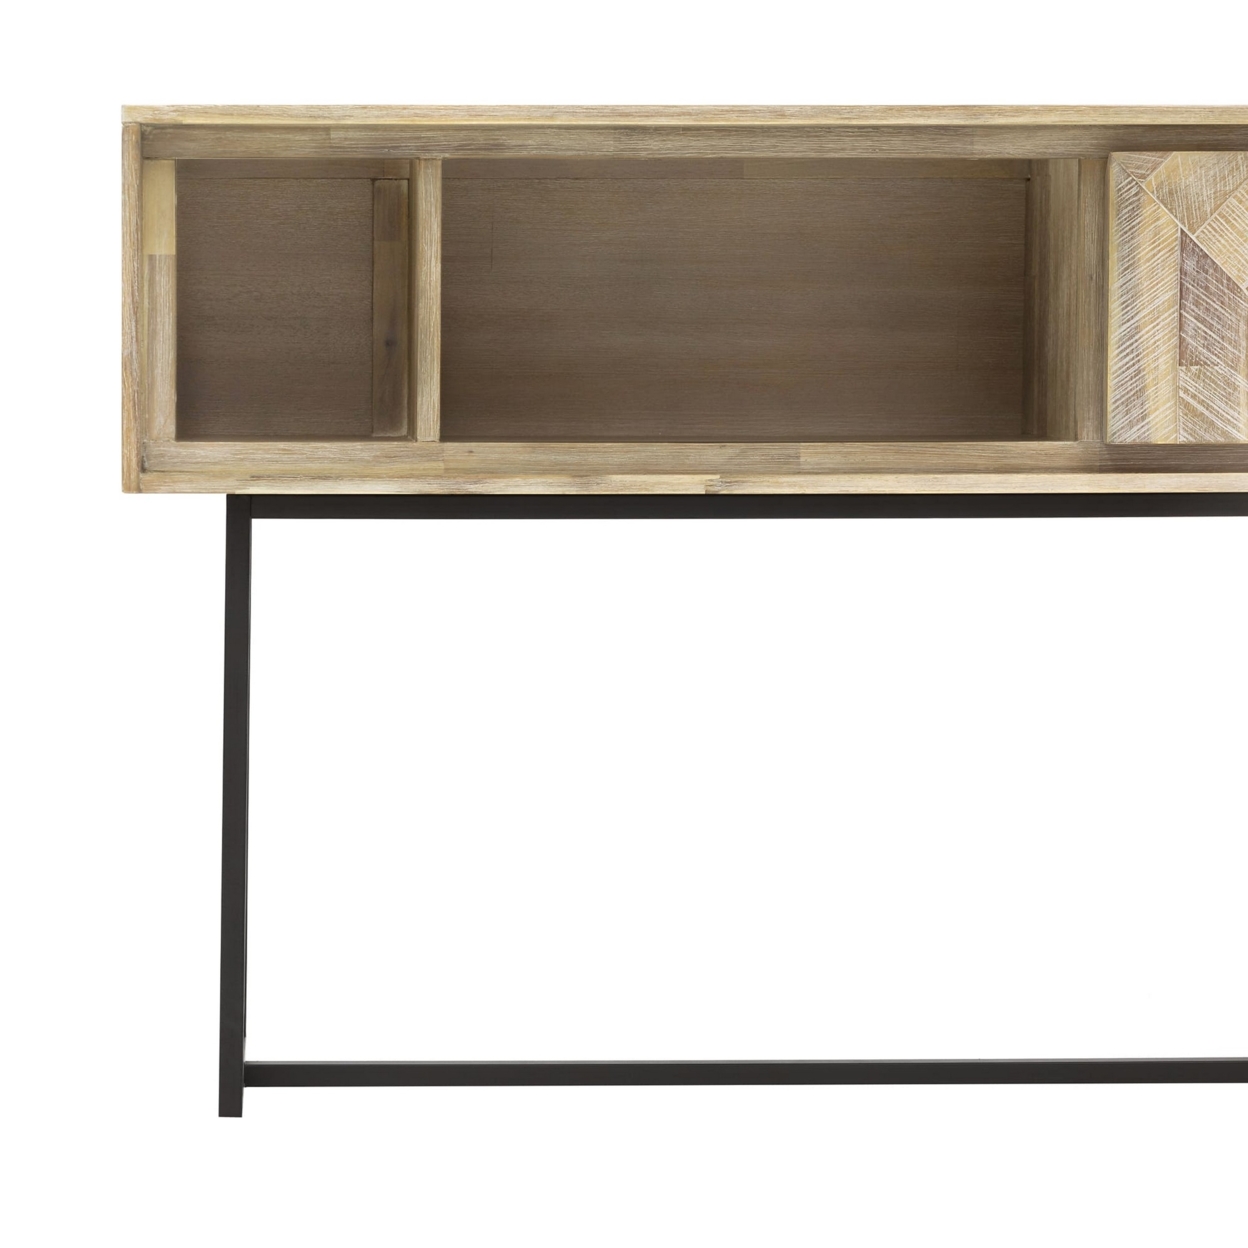 Rexi 51 Inch Sideboard Console Table, Drawer, Open Shelf, Natural Brown- Saltoro Sherpi